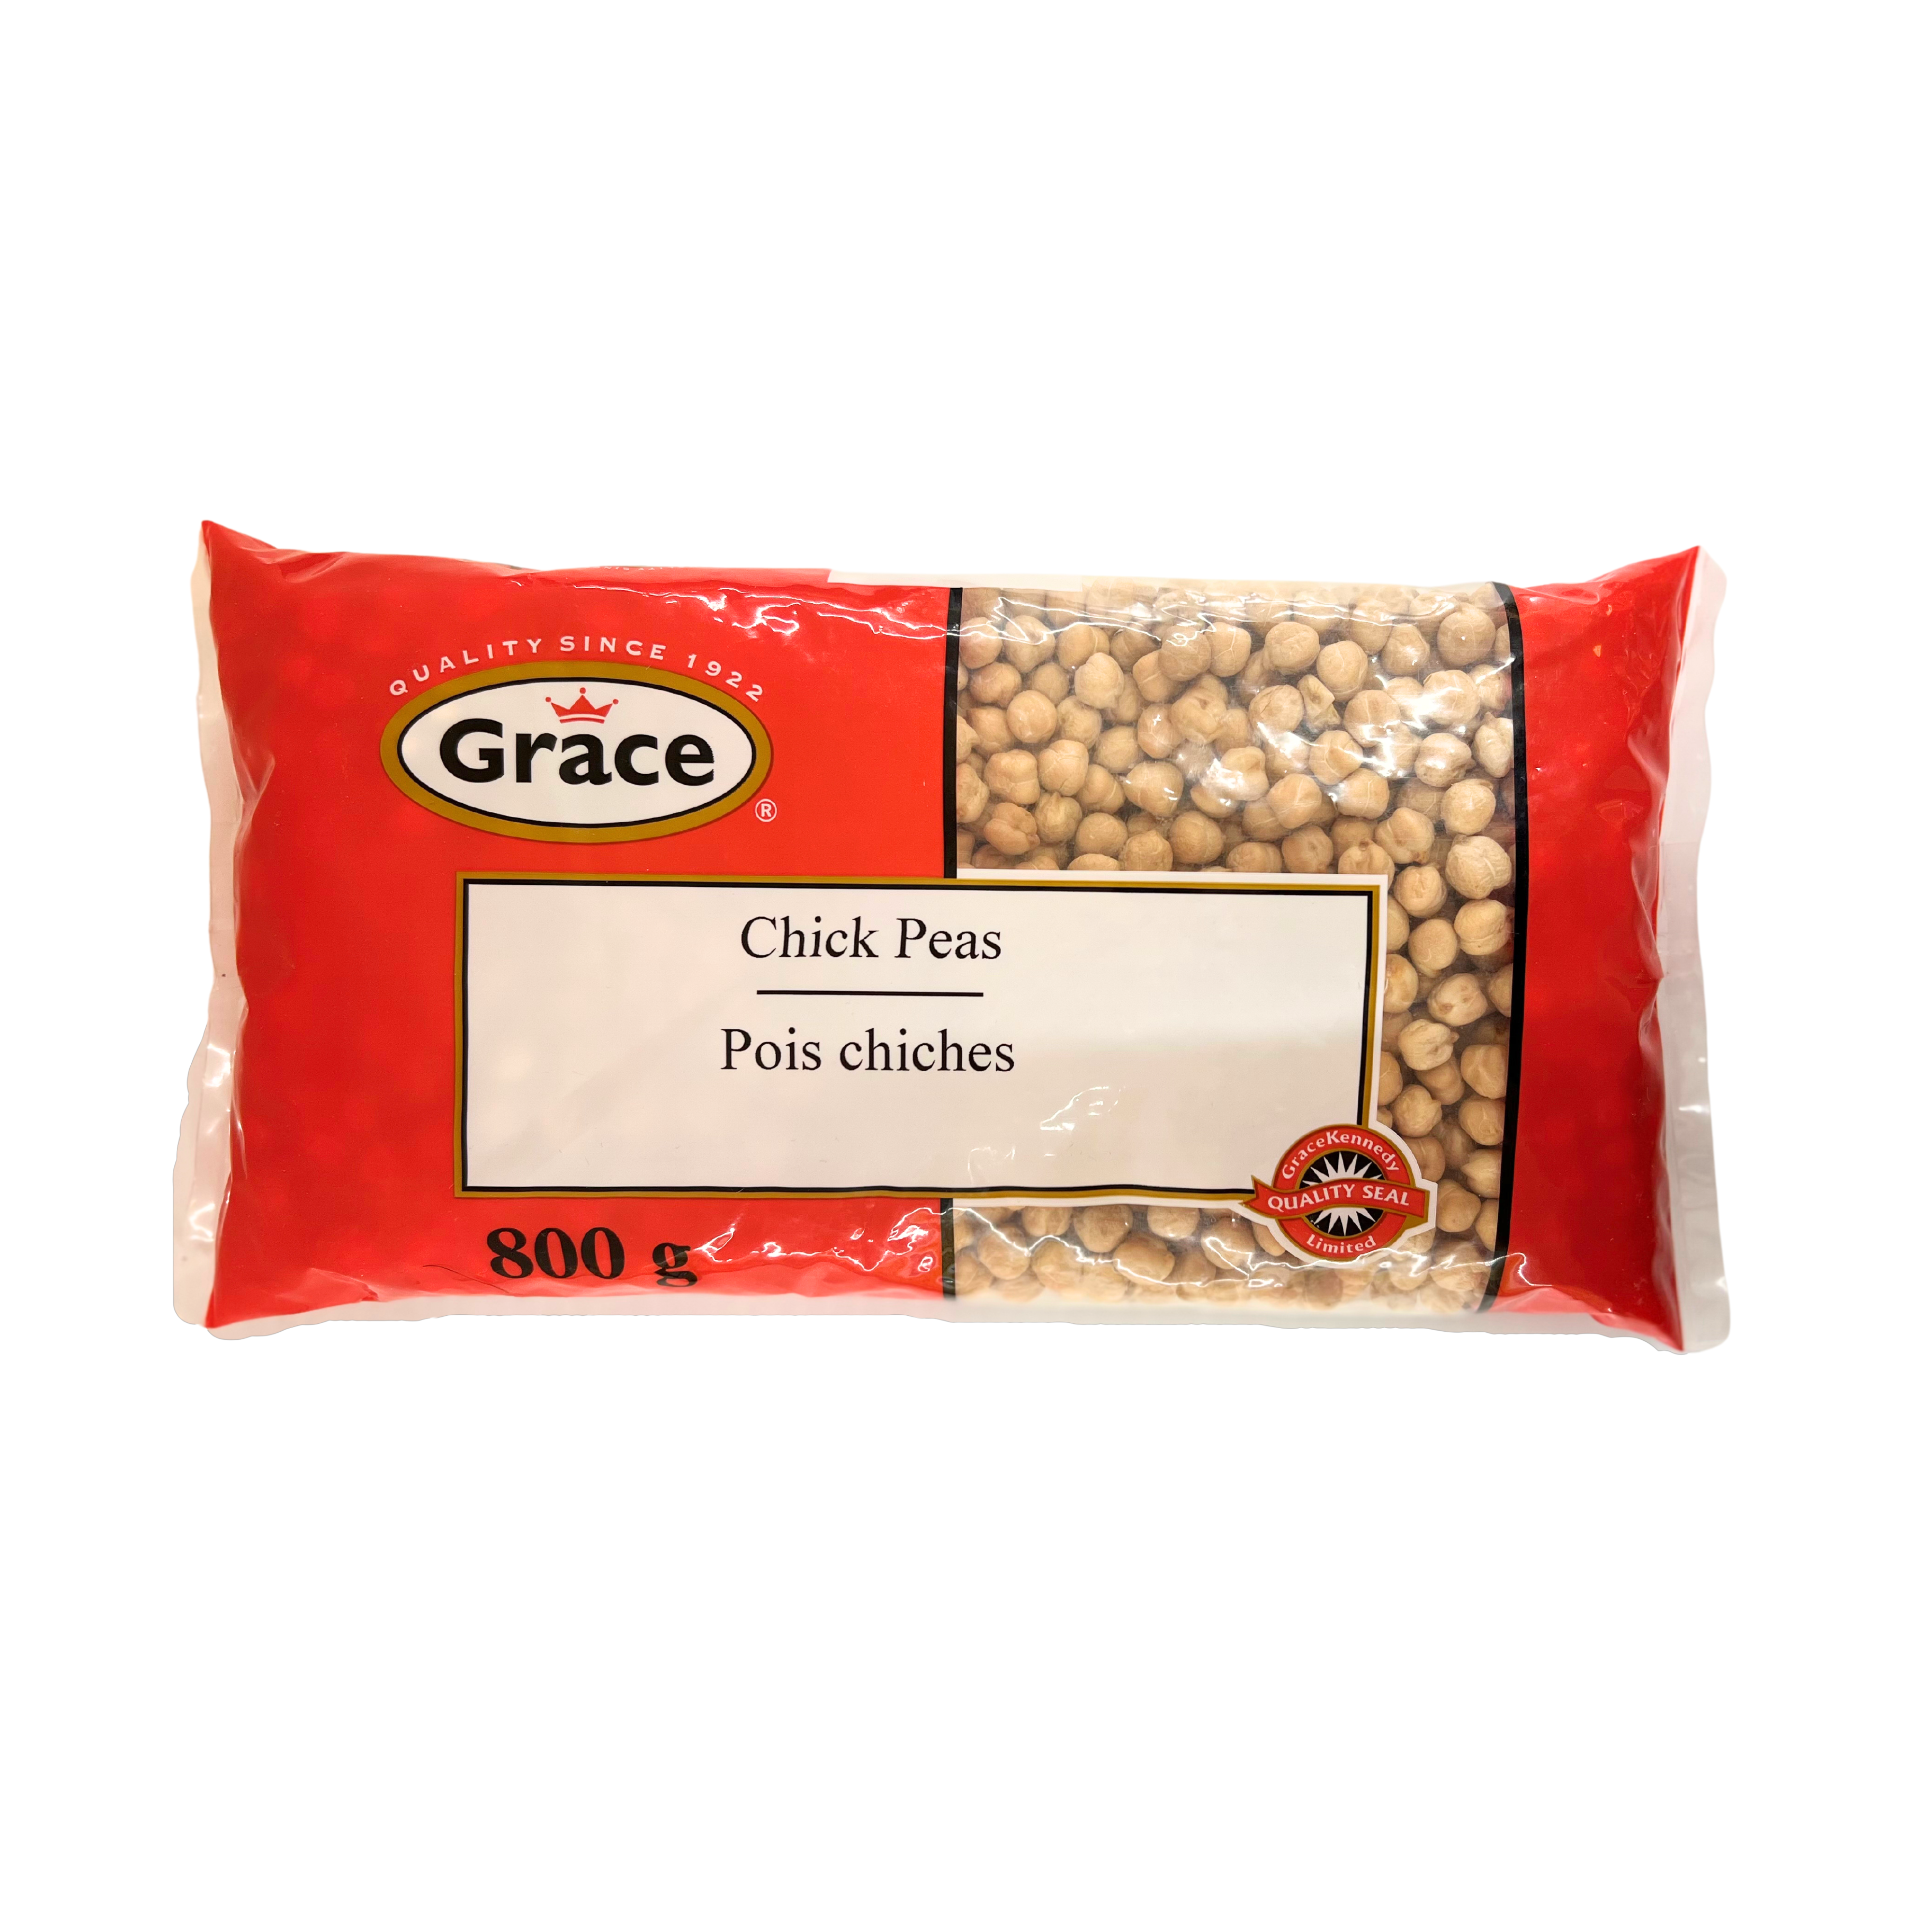 Grace Chick Peas 800g